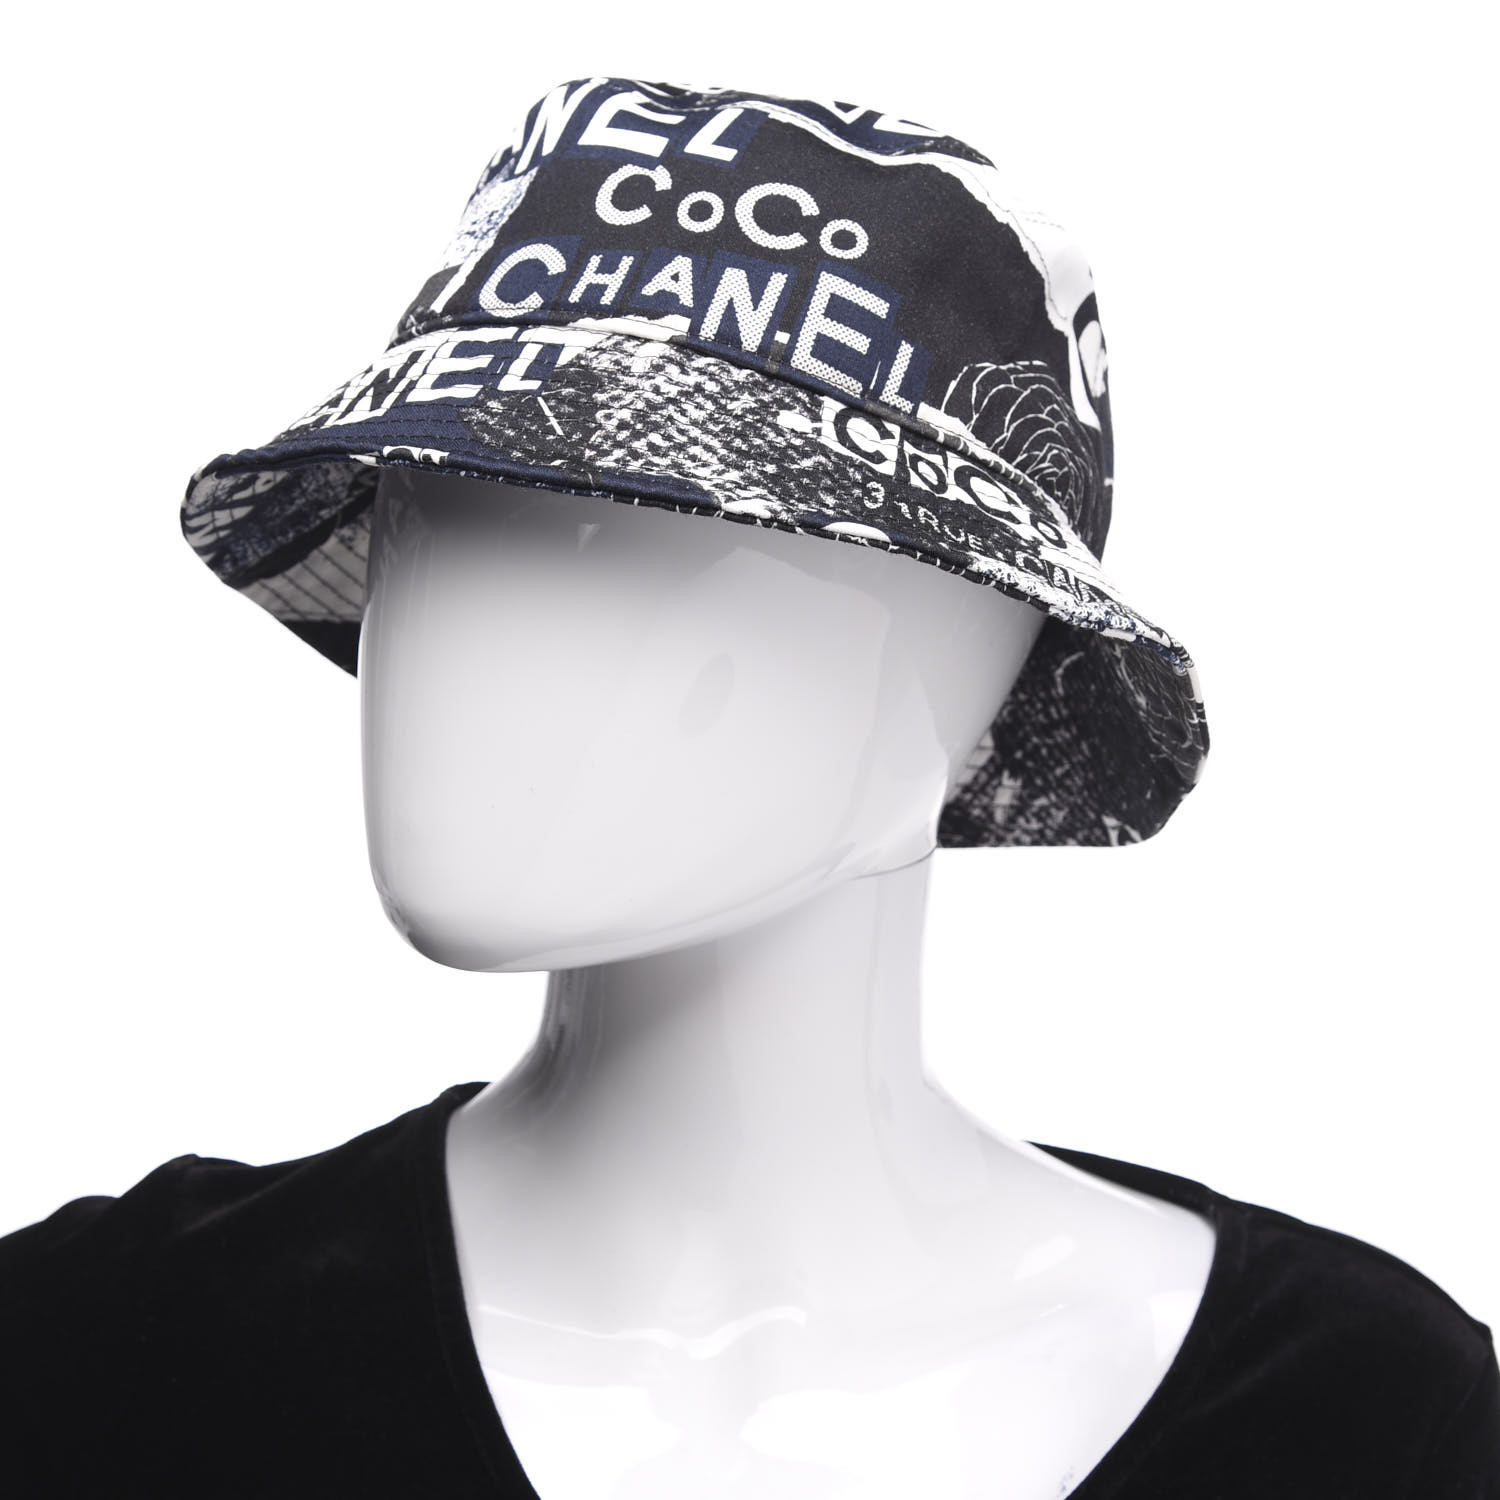 CHANEL Cotton Coco Print Bucket Hat M Navy Black White 637774 FASHIONPHILE